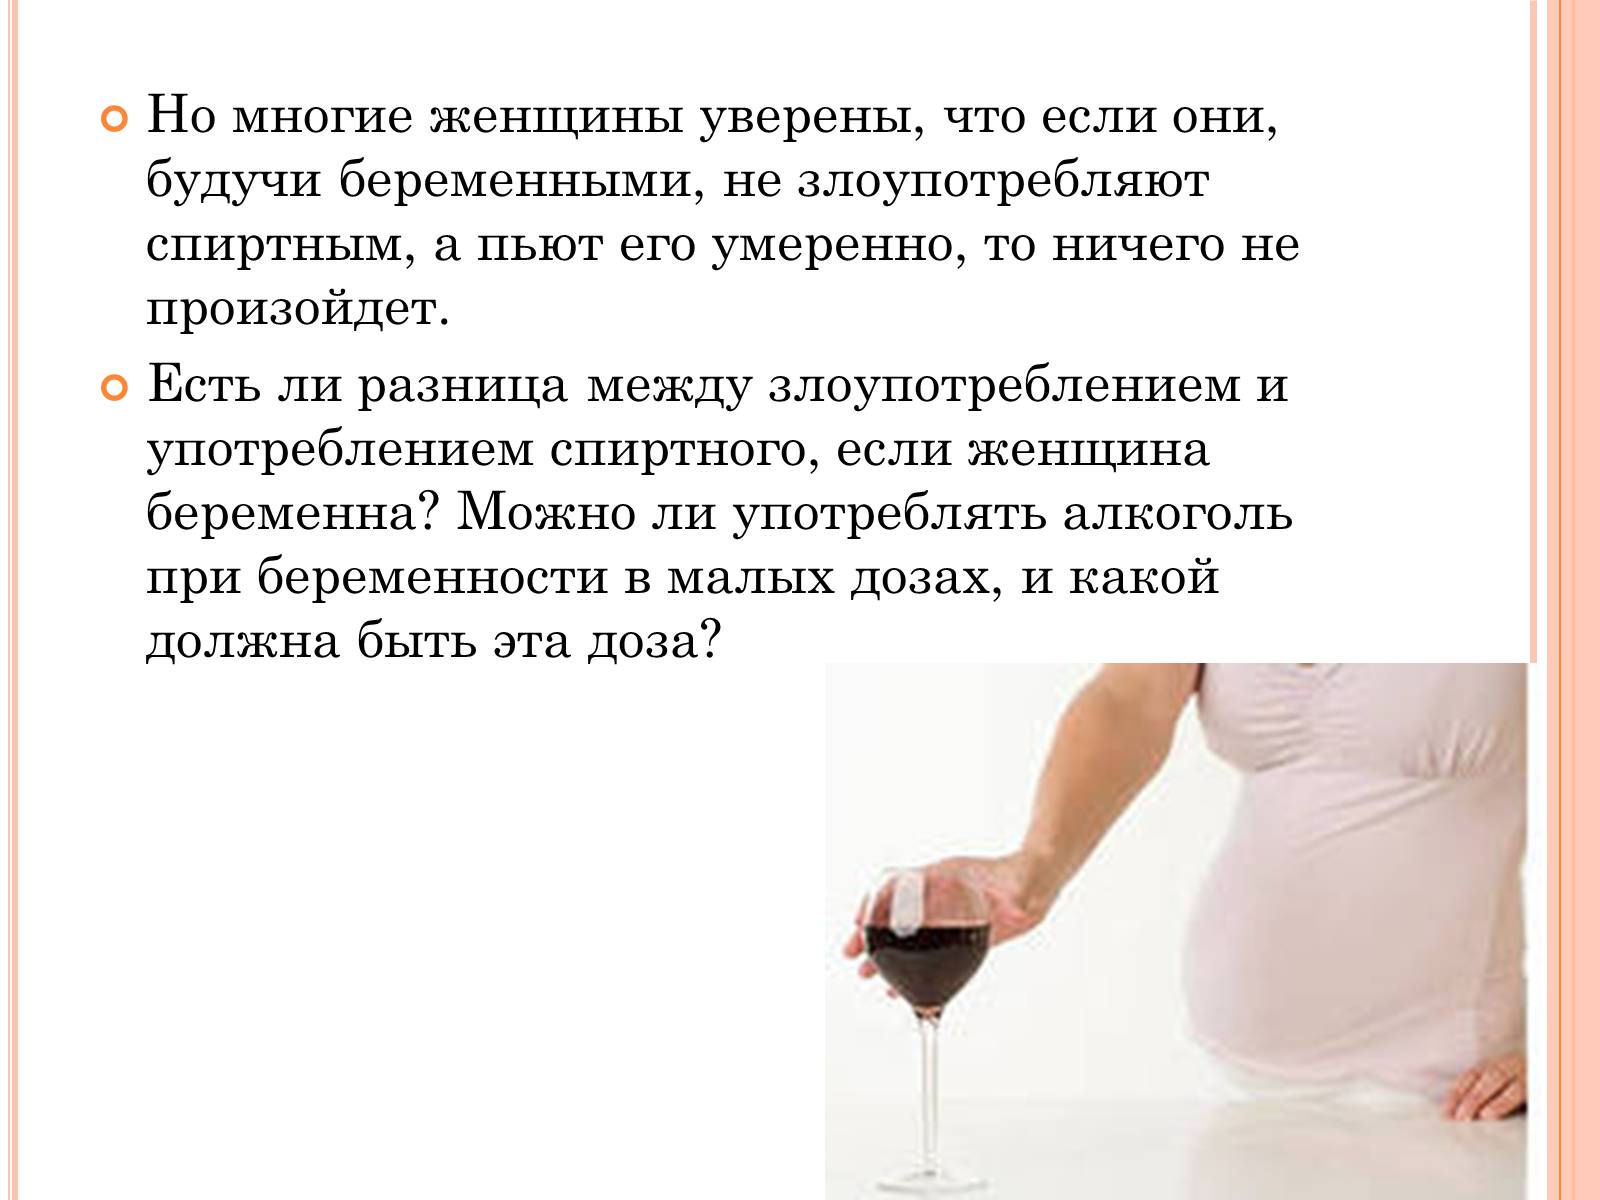 Можно вино при беременности. Алкоголь при беременности. Что можно пить при беременности алкоголь.